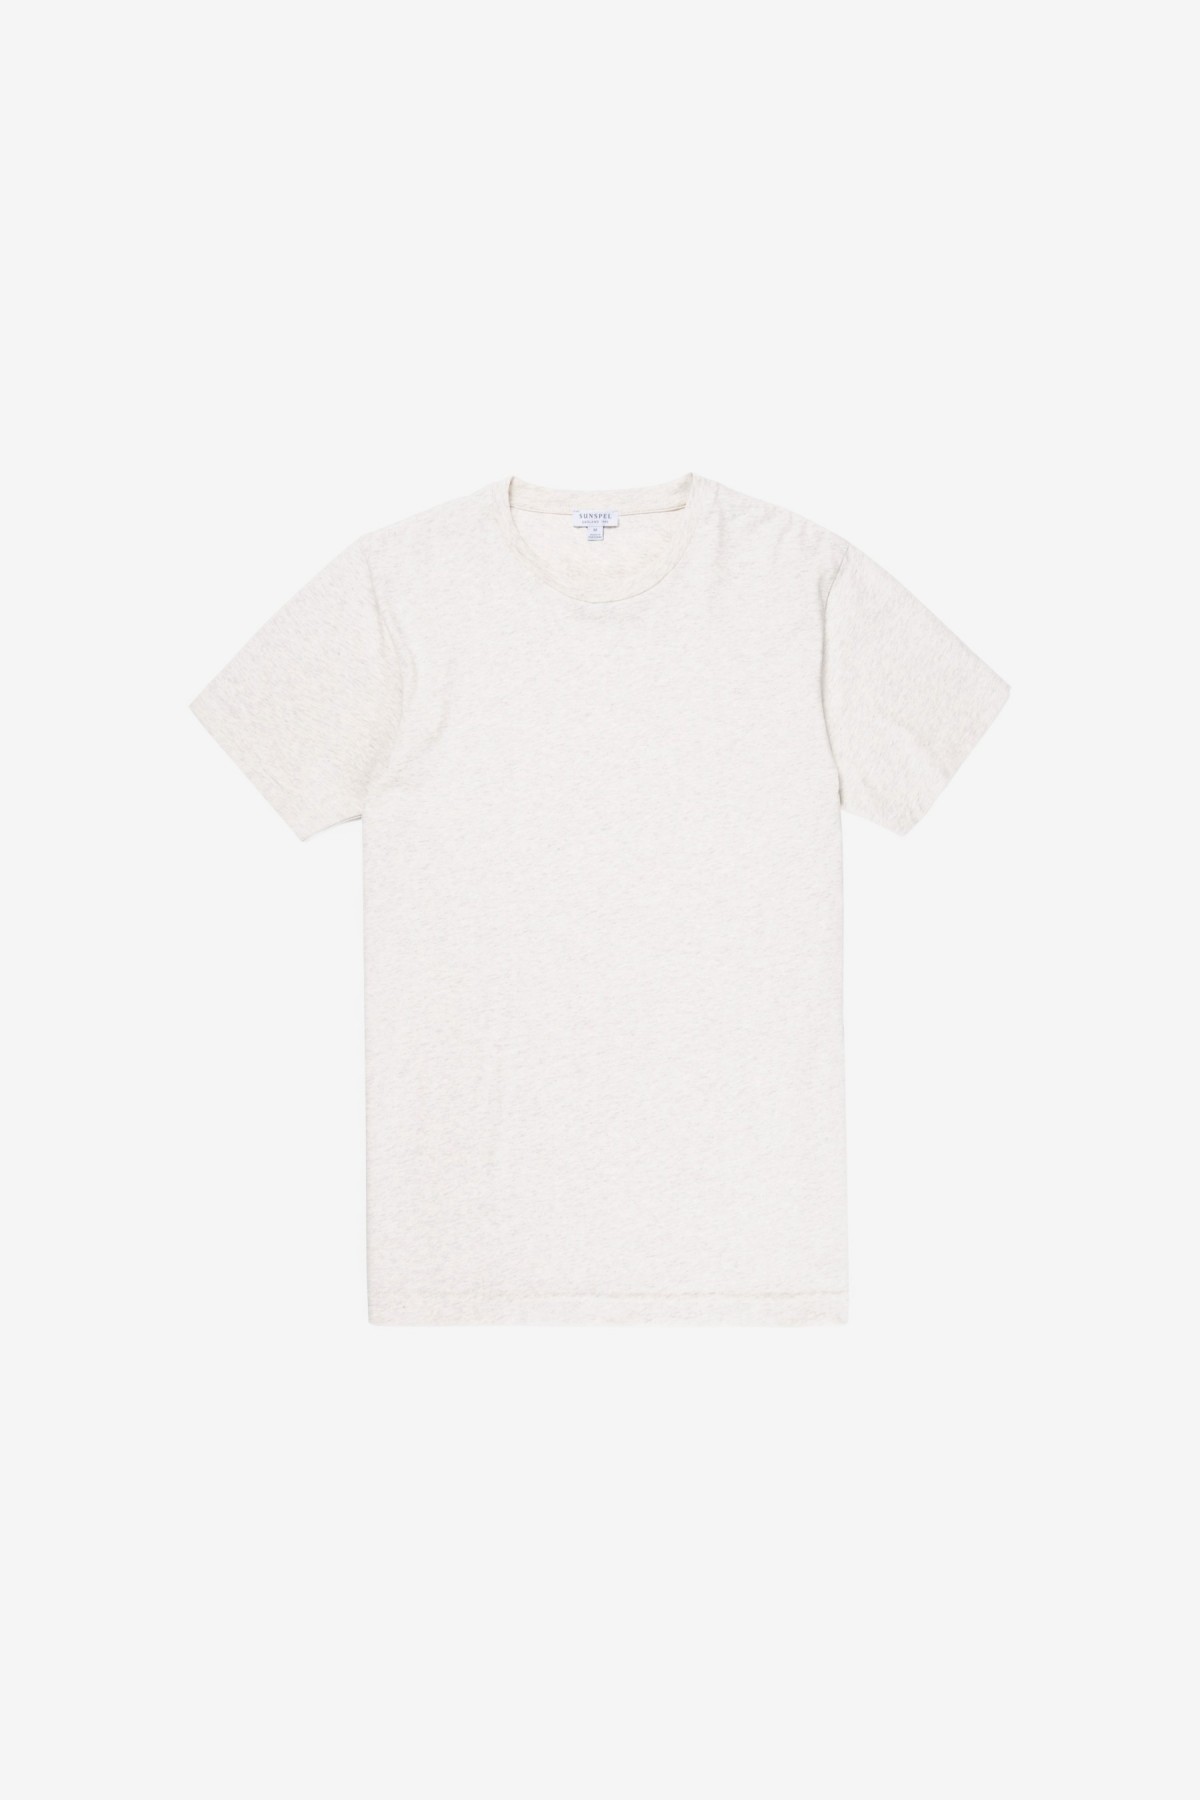 Sunspel Short Sleeve Riviera Crew Neck T-Shirt in Archive White Melange